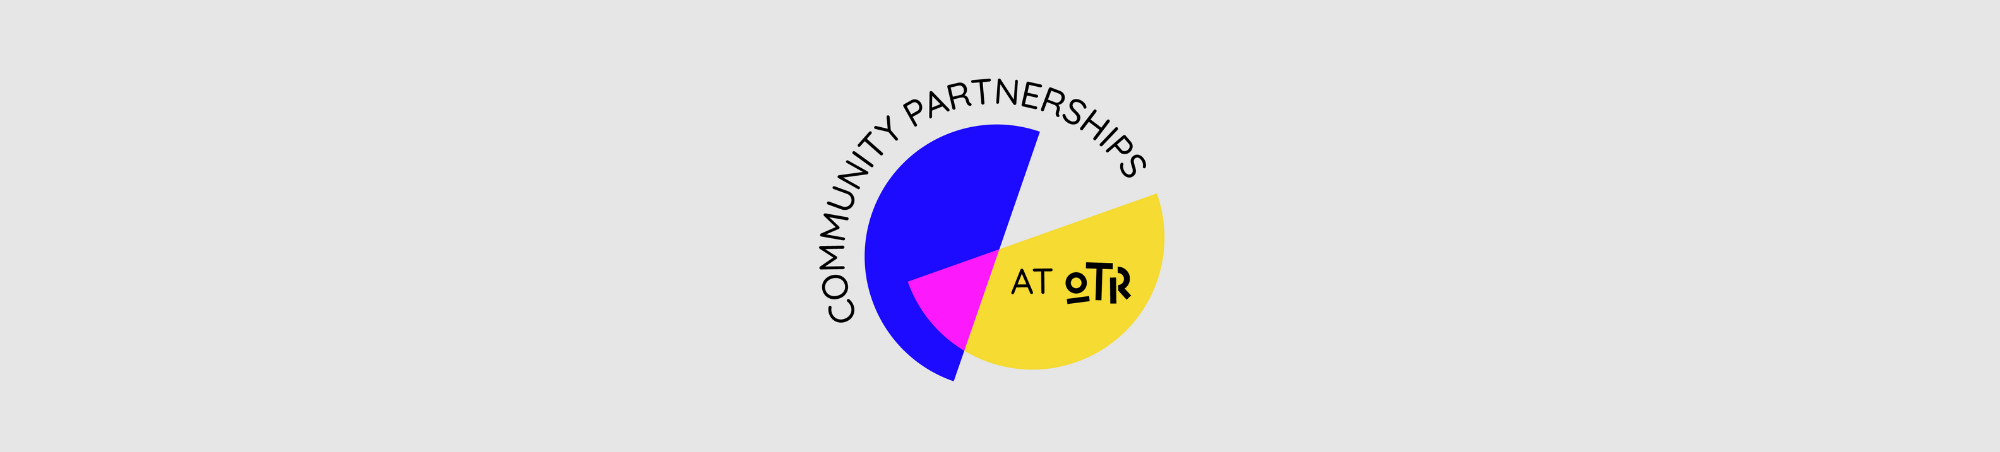 Community Partnership at OTR